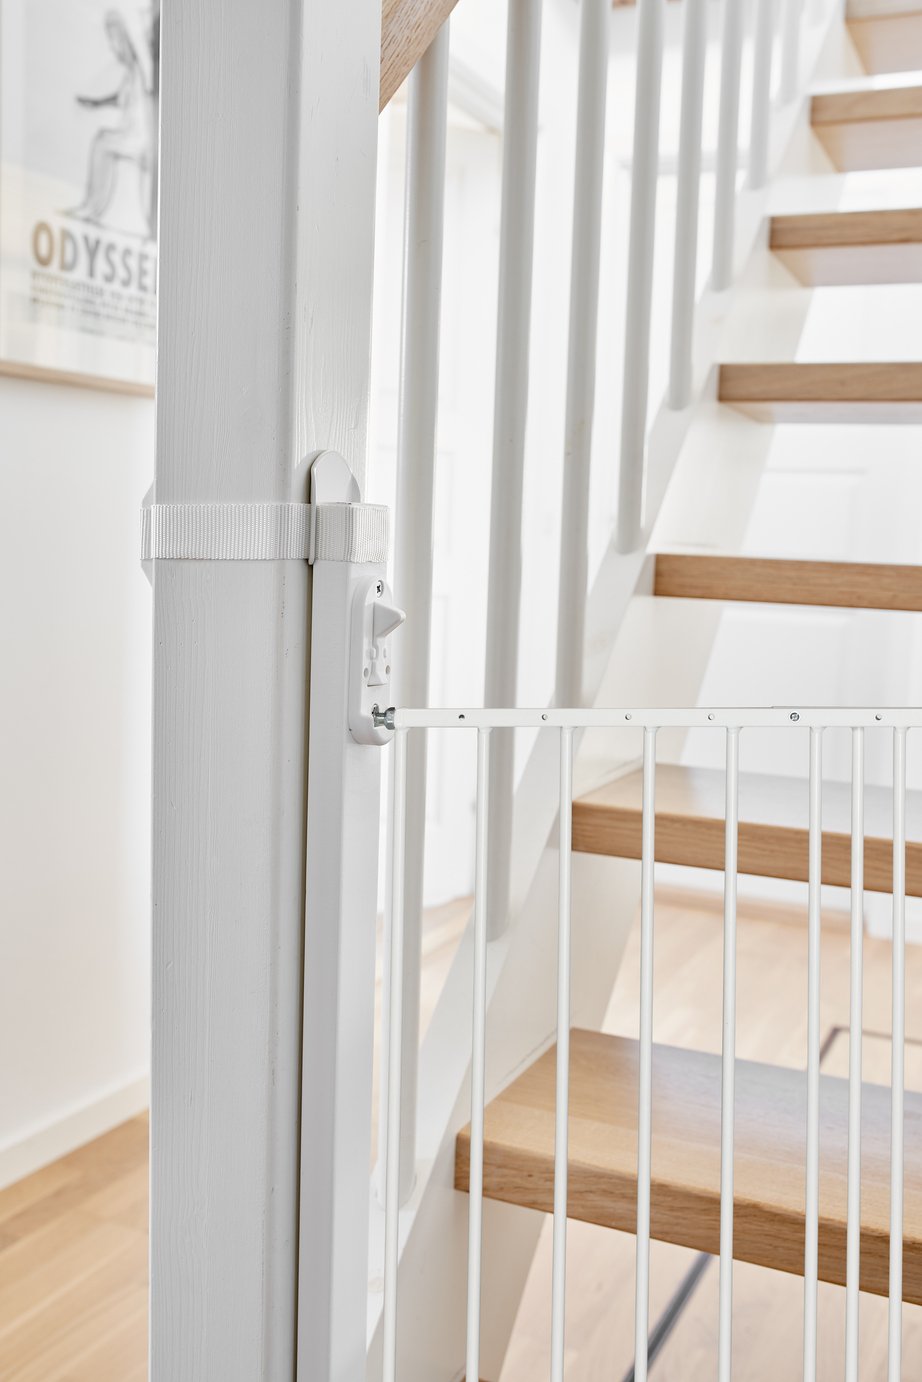 BabyDan Stair Case Adaptor Fitting Kit Review